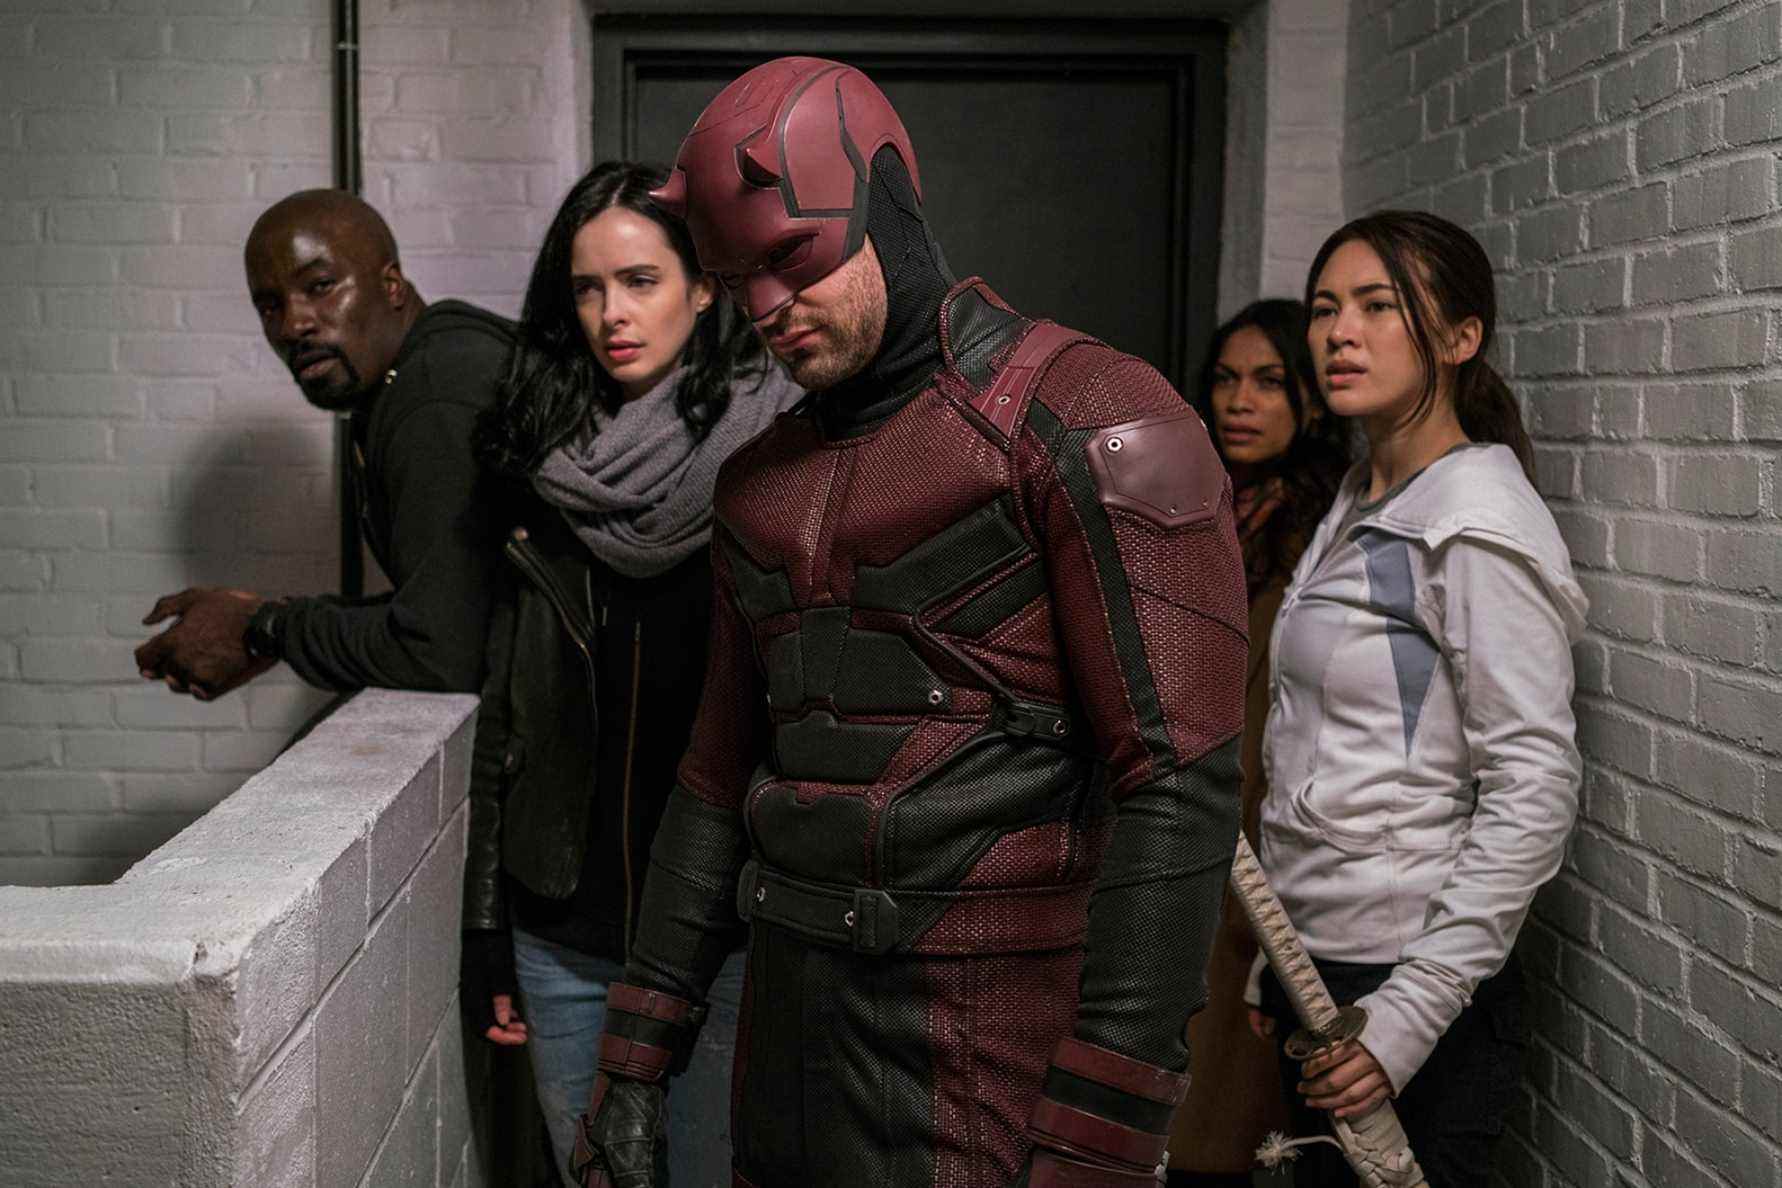 Disney + Plus a besoin de contenu adulte mature comme Marvel Netflix montre Daredevil Jessica Jones Luke Cage Iron Fist The Punisher The Defenders